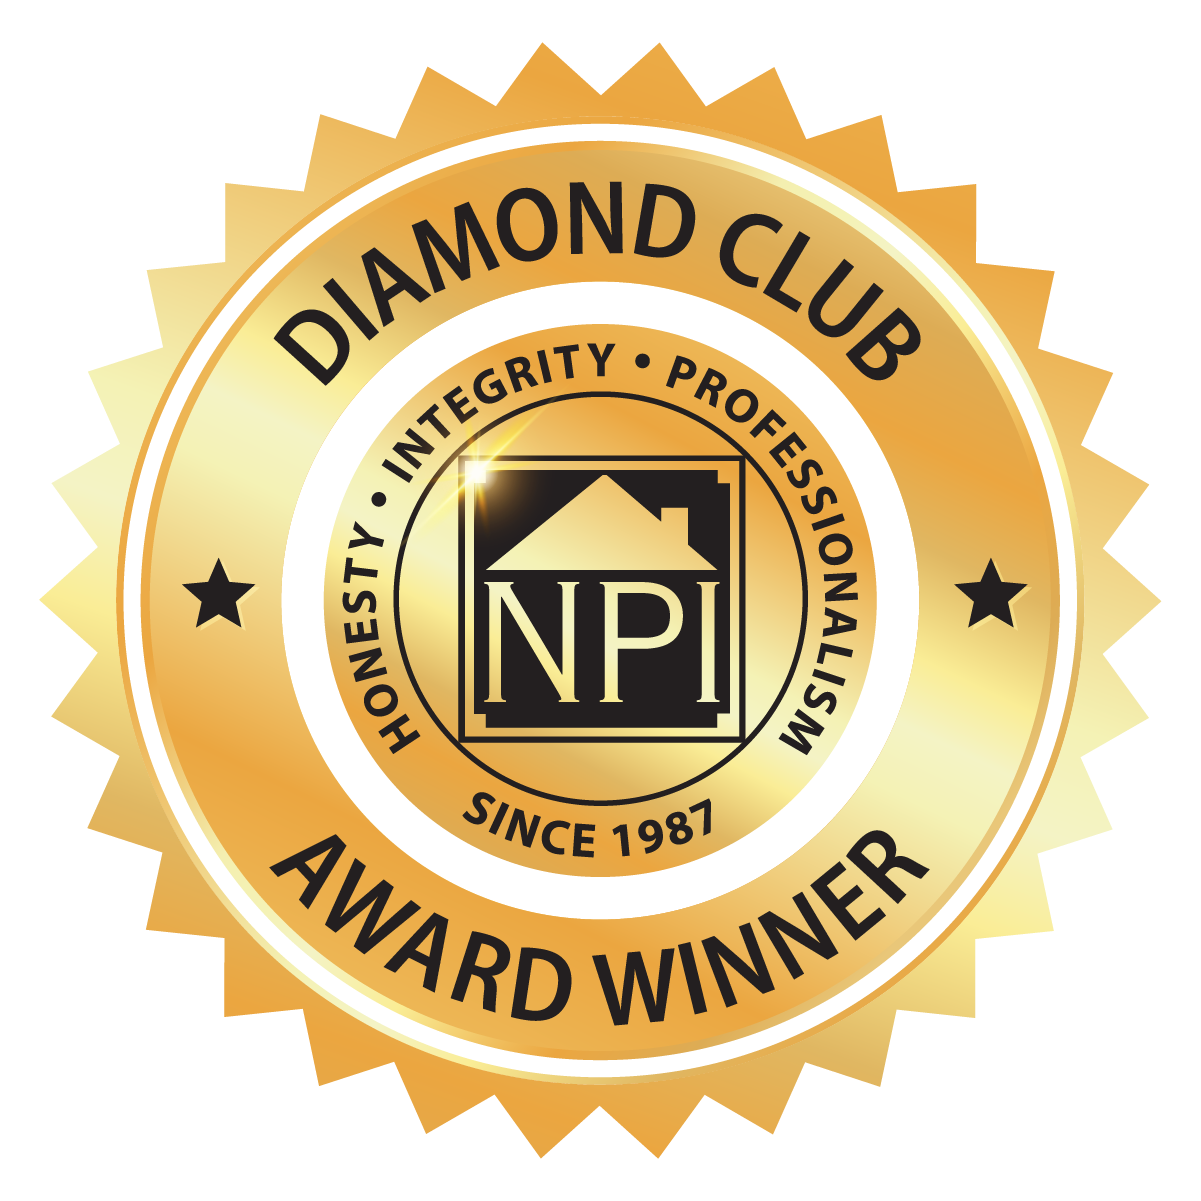 Diamond Club Award Recipient